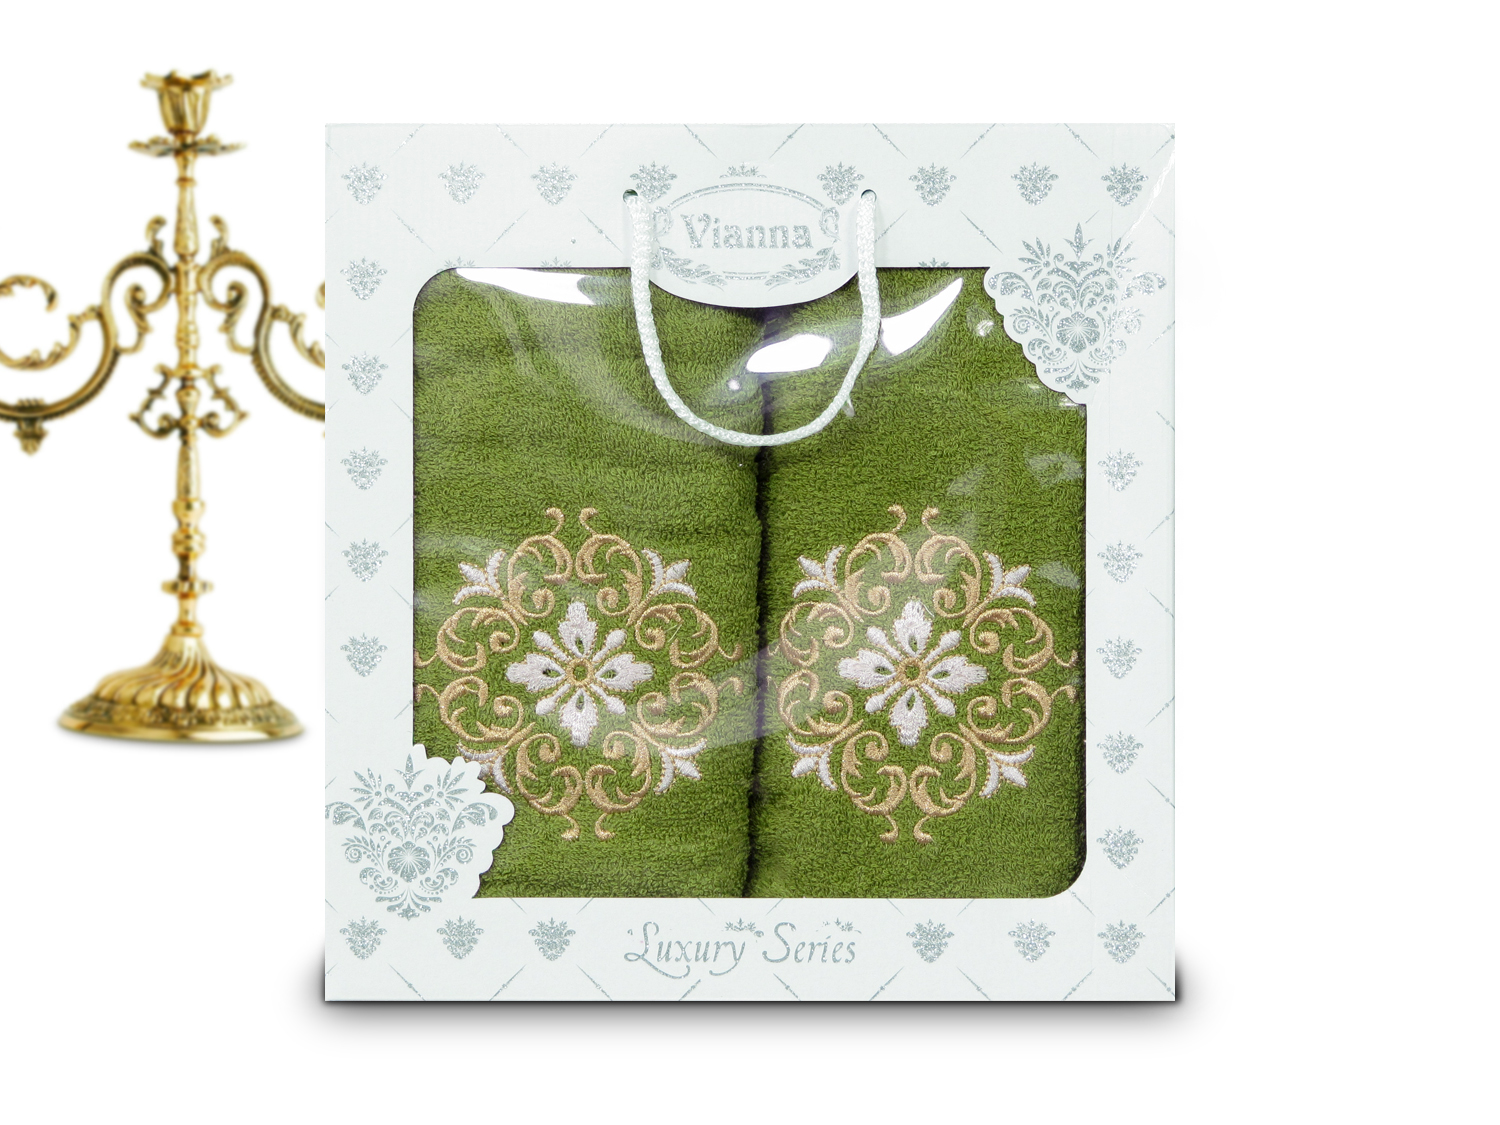 Набор полотенец Vianna Luxury Series (50x90, 70x140)